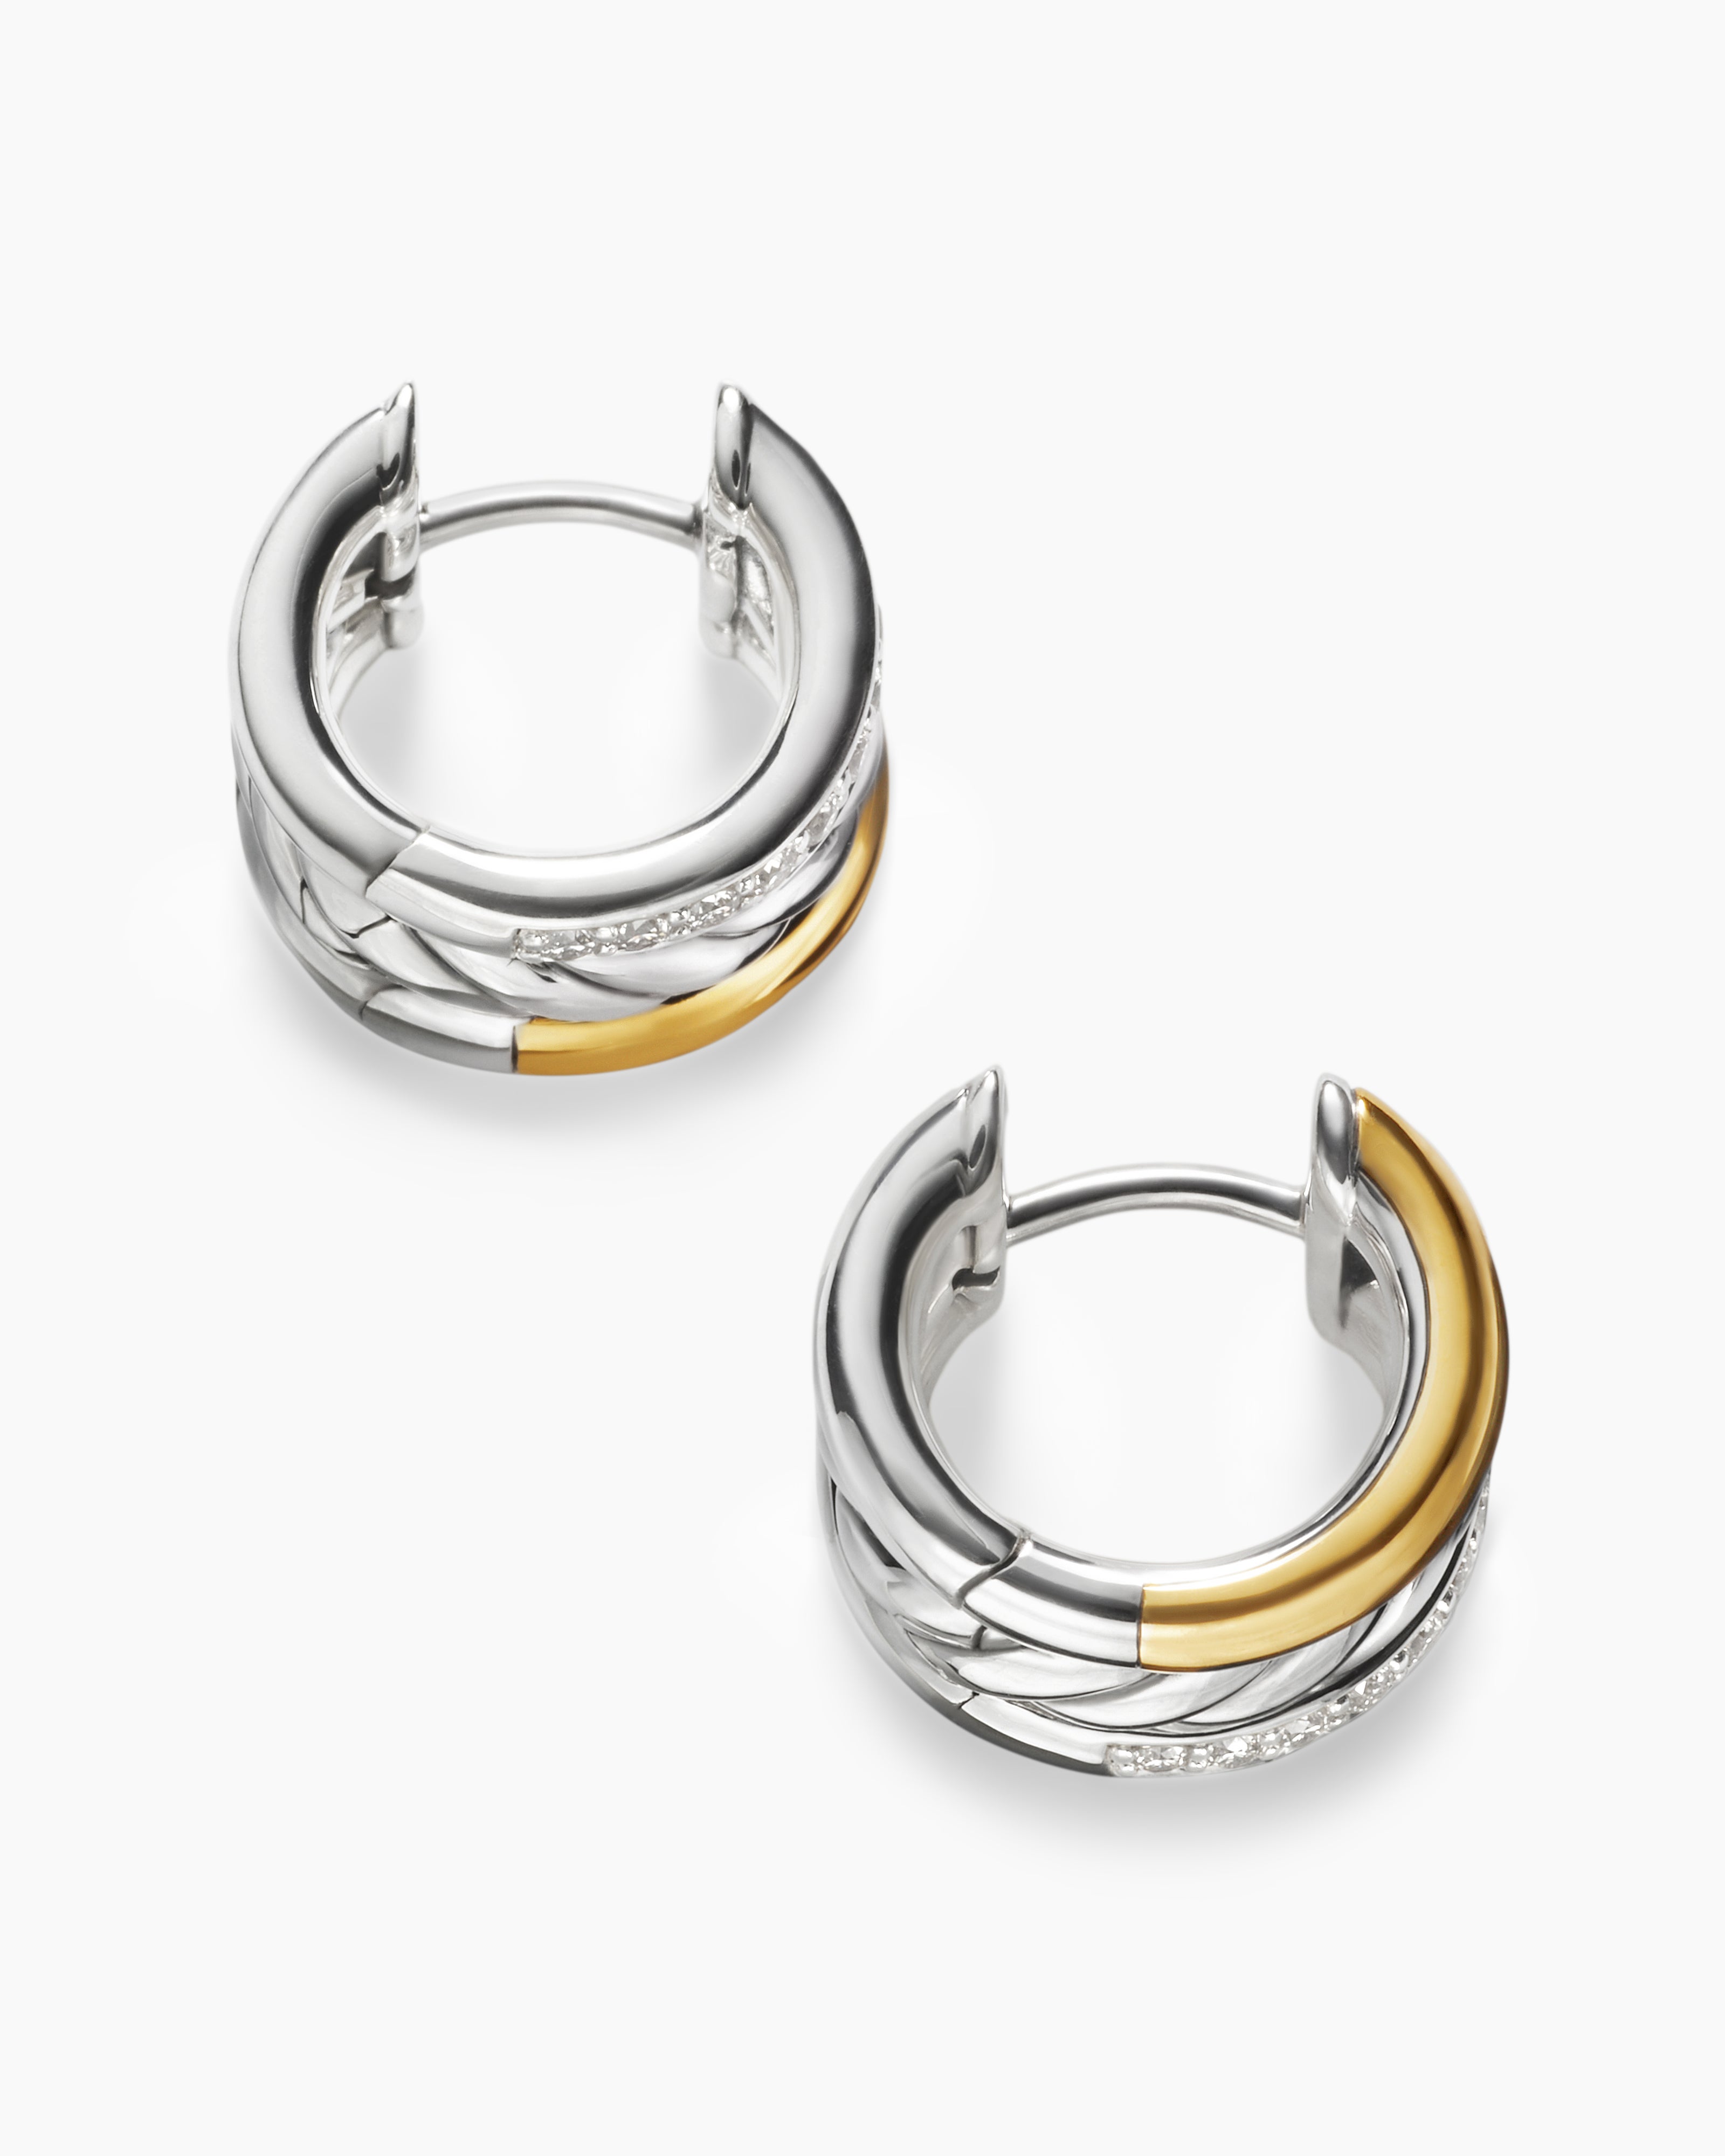 DY Mercer™ Huggie Hoop Earrings in Sterling Silver with 18K Yellow Gold and  Diamonds, 14mm | David Yurman